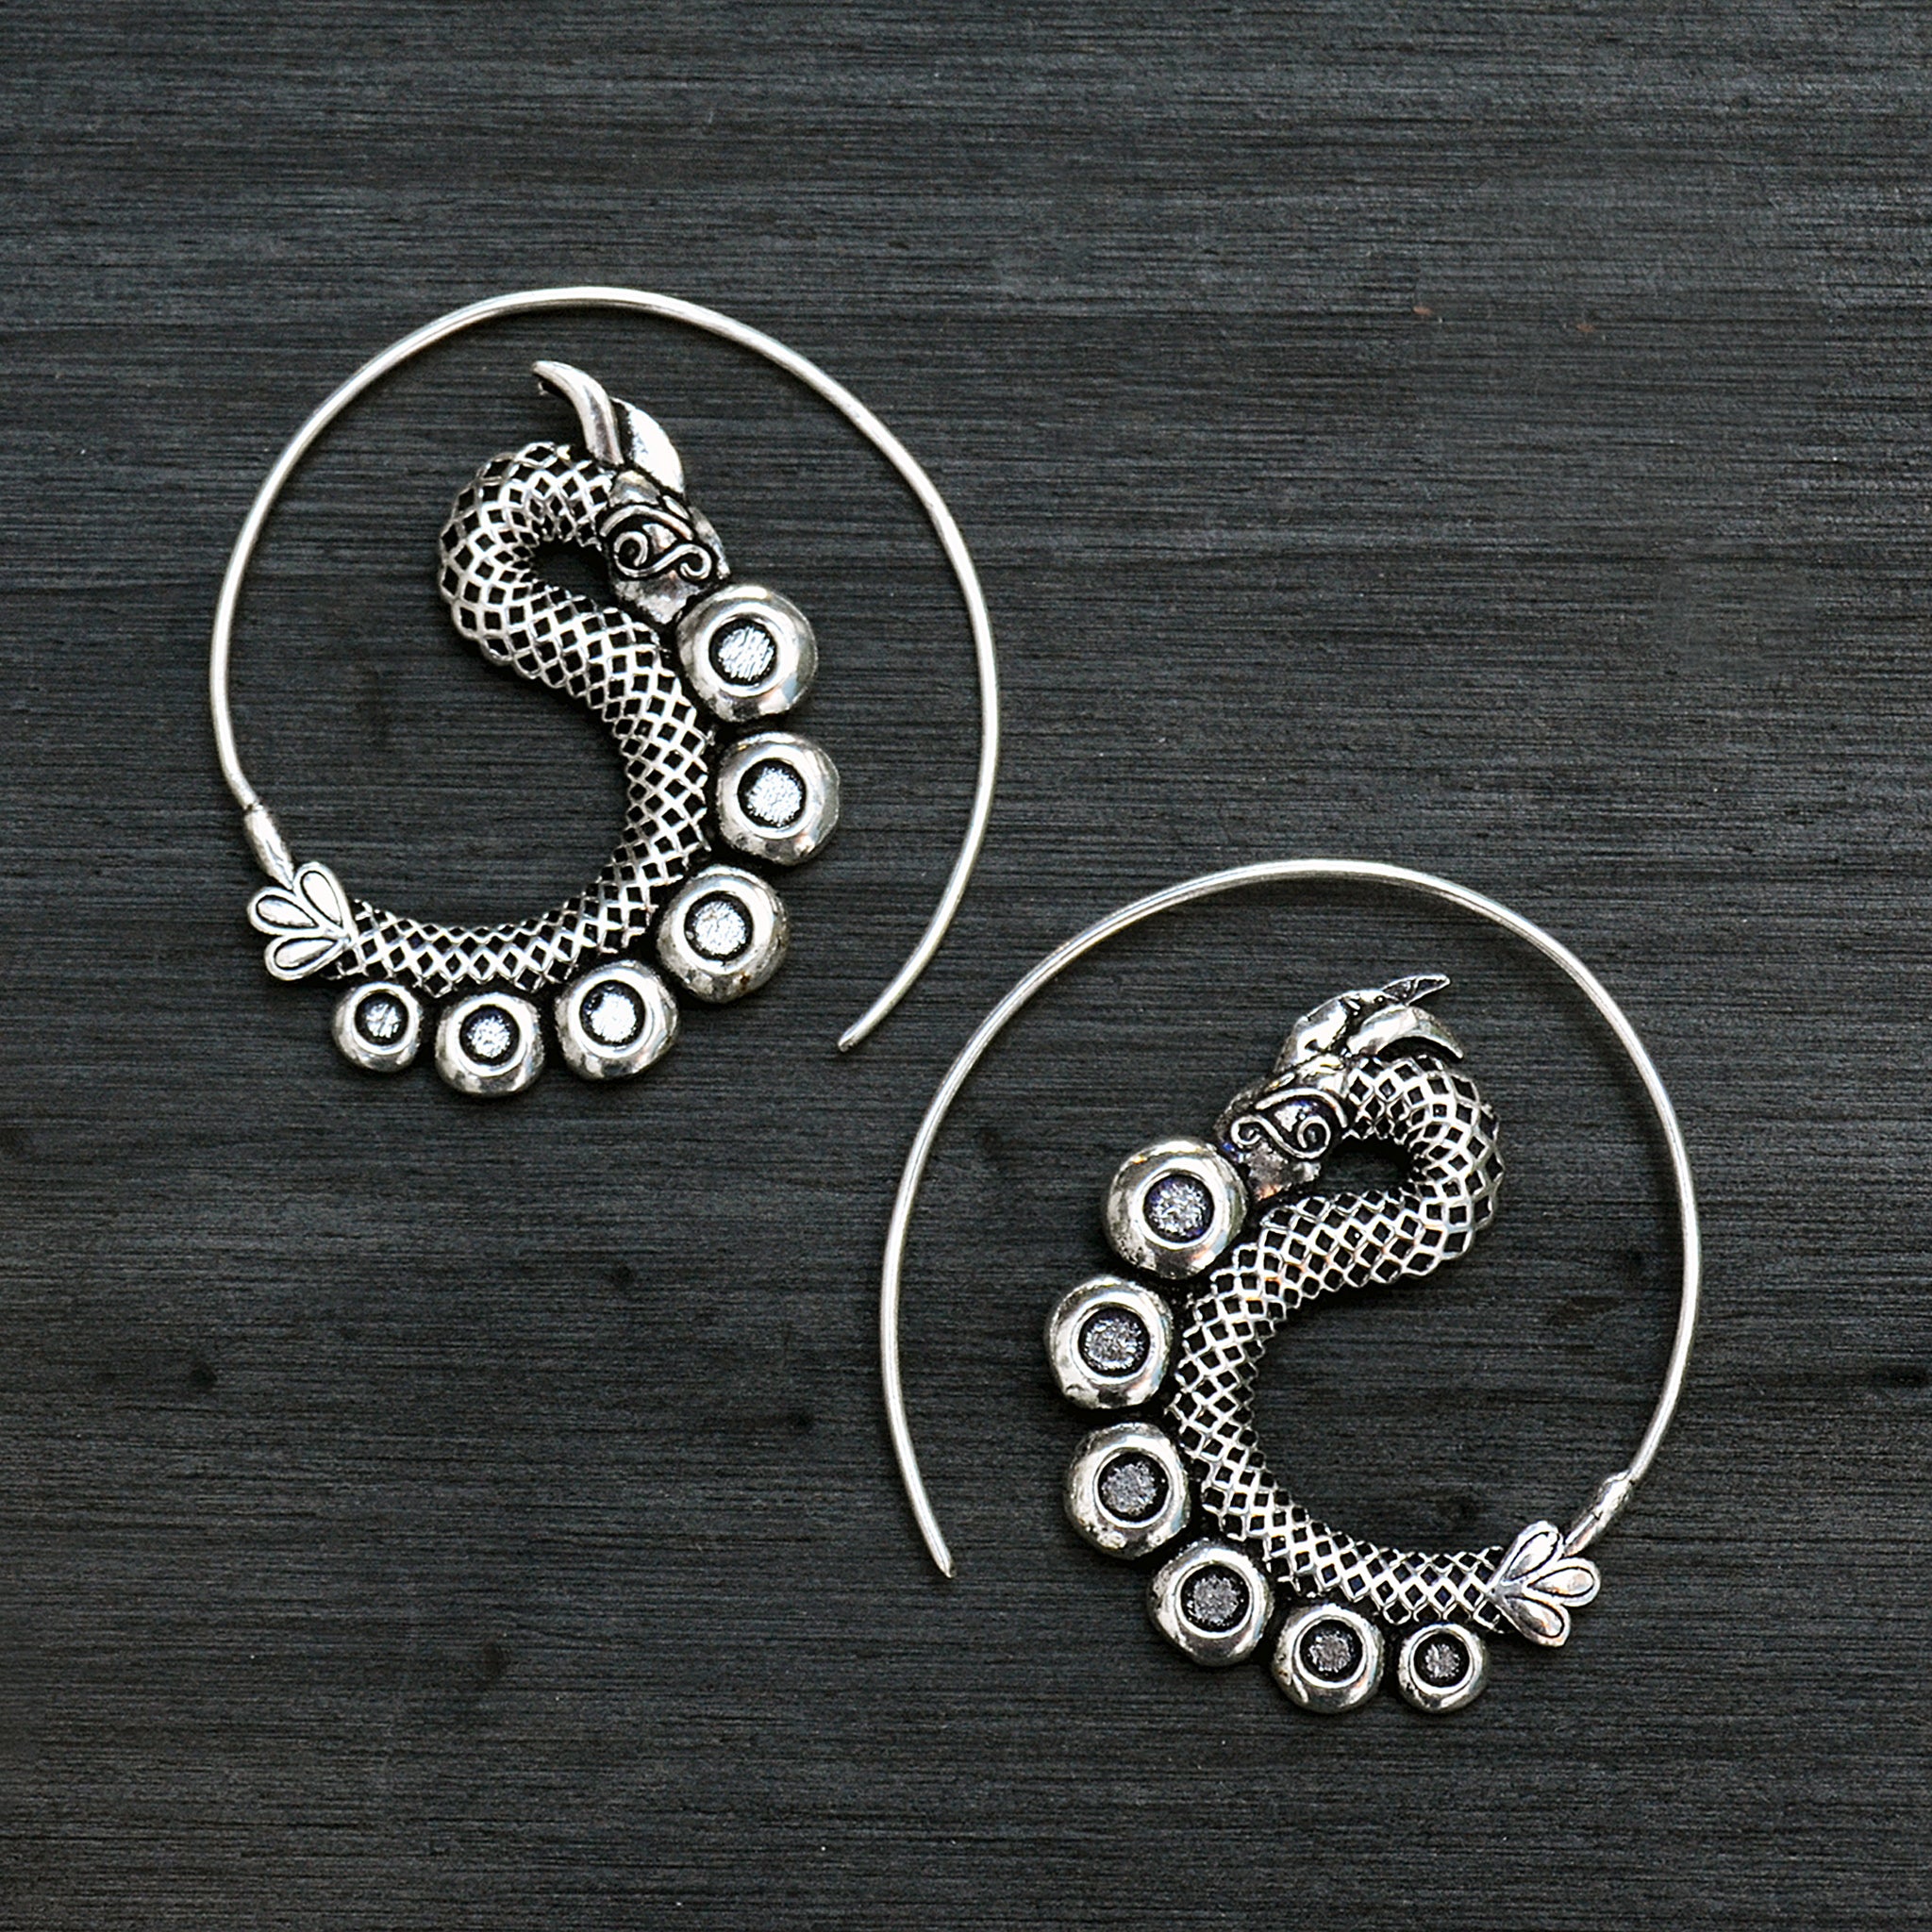 Tribal spiral silver dagon earrings on black background